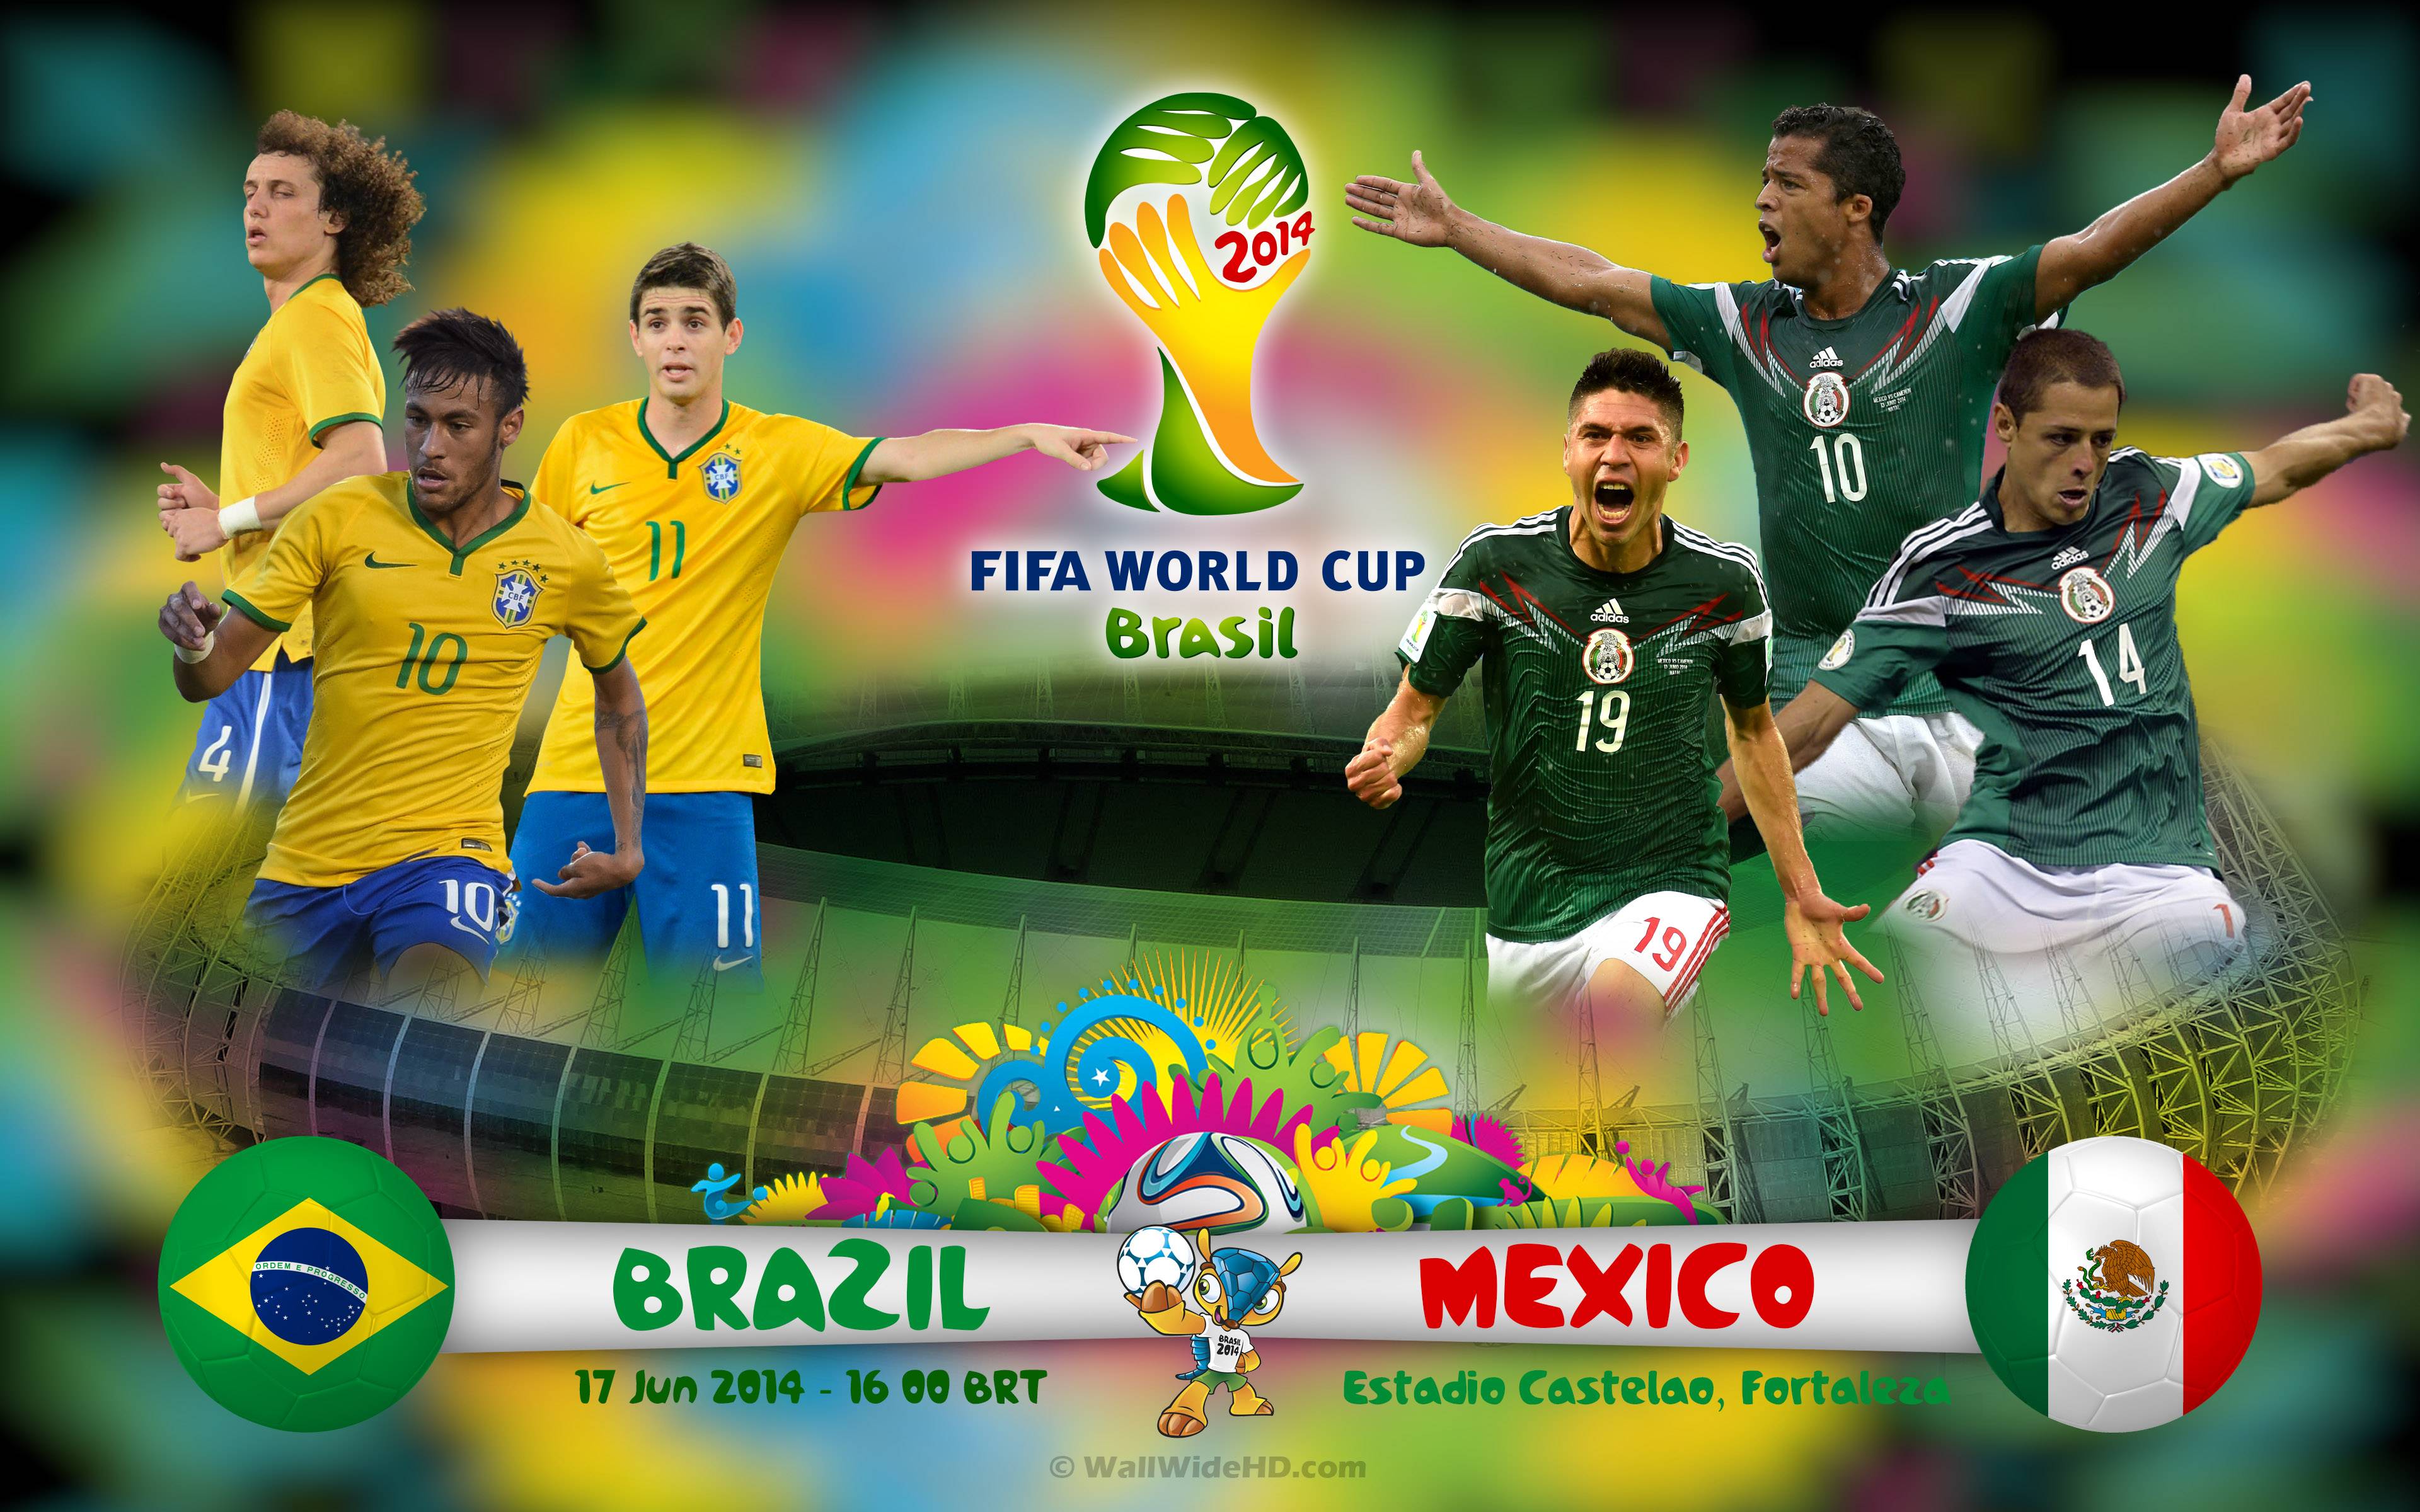 Brazil vs Mexico 2014 World Cup Group A Football Match Wallpaper